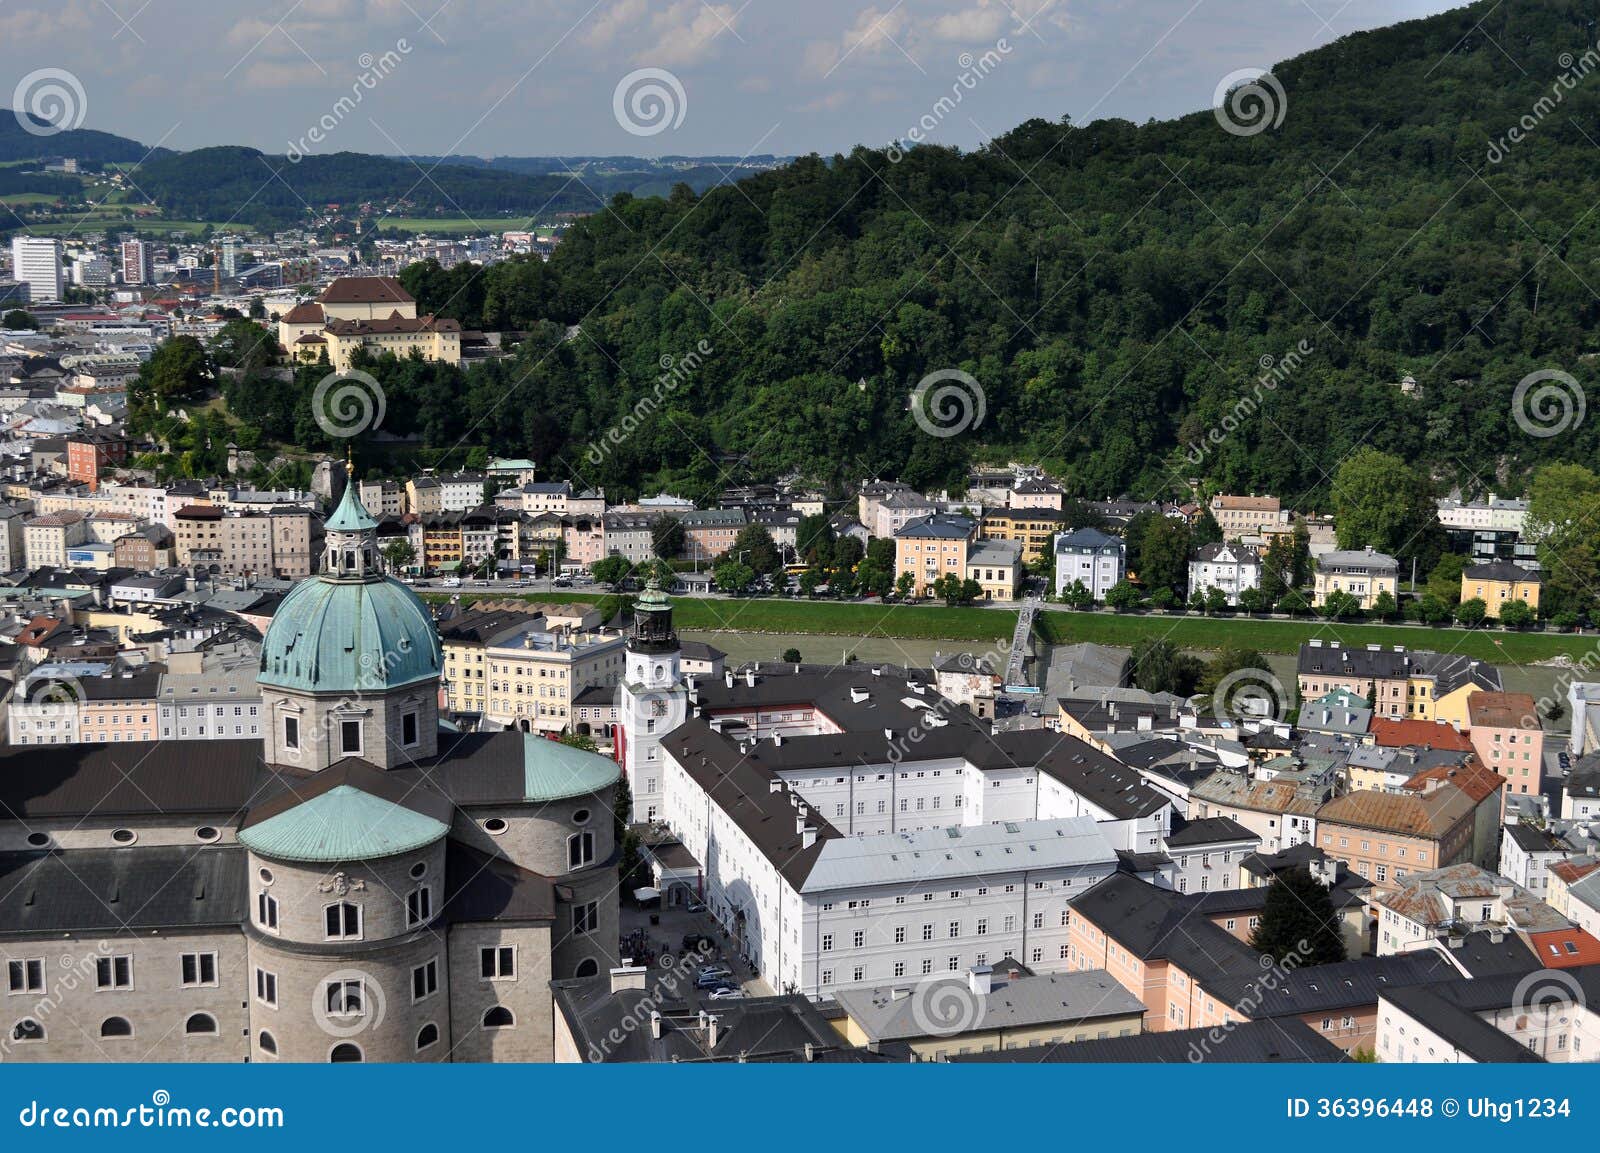 Salzburg, Austria stock photo. Image of baroque, austria - 36396448